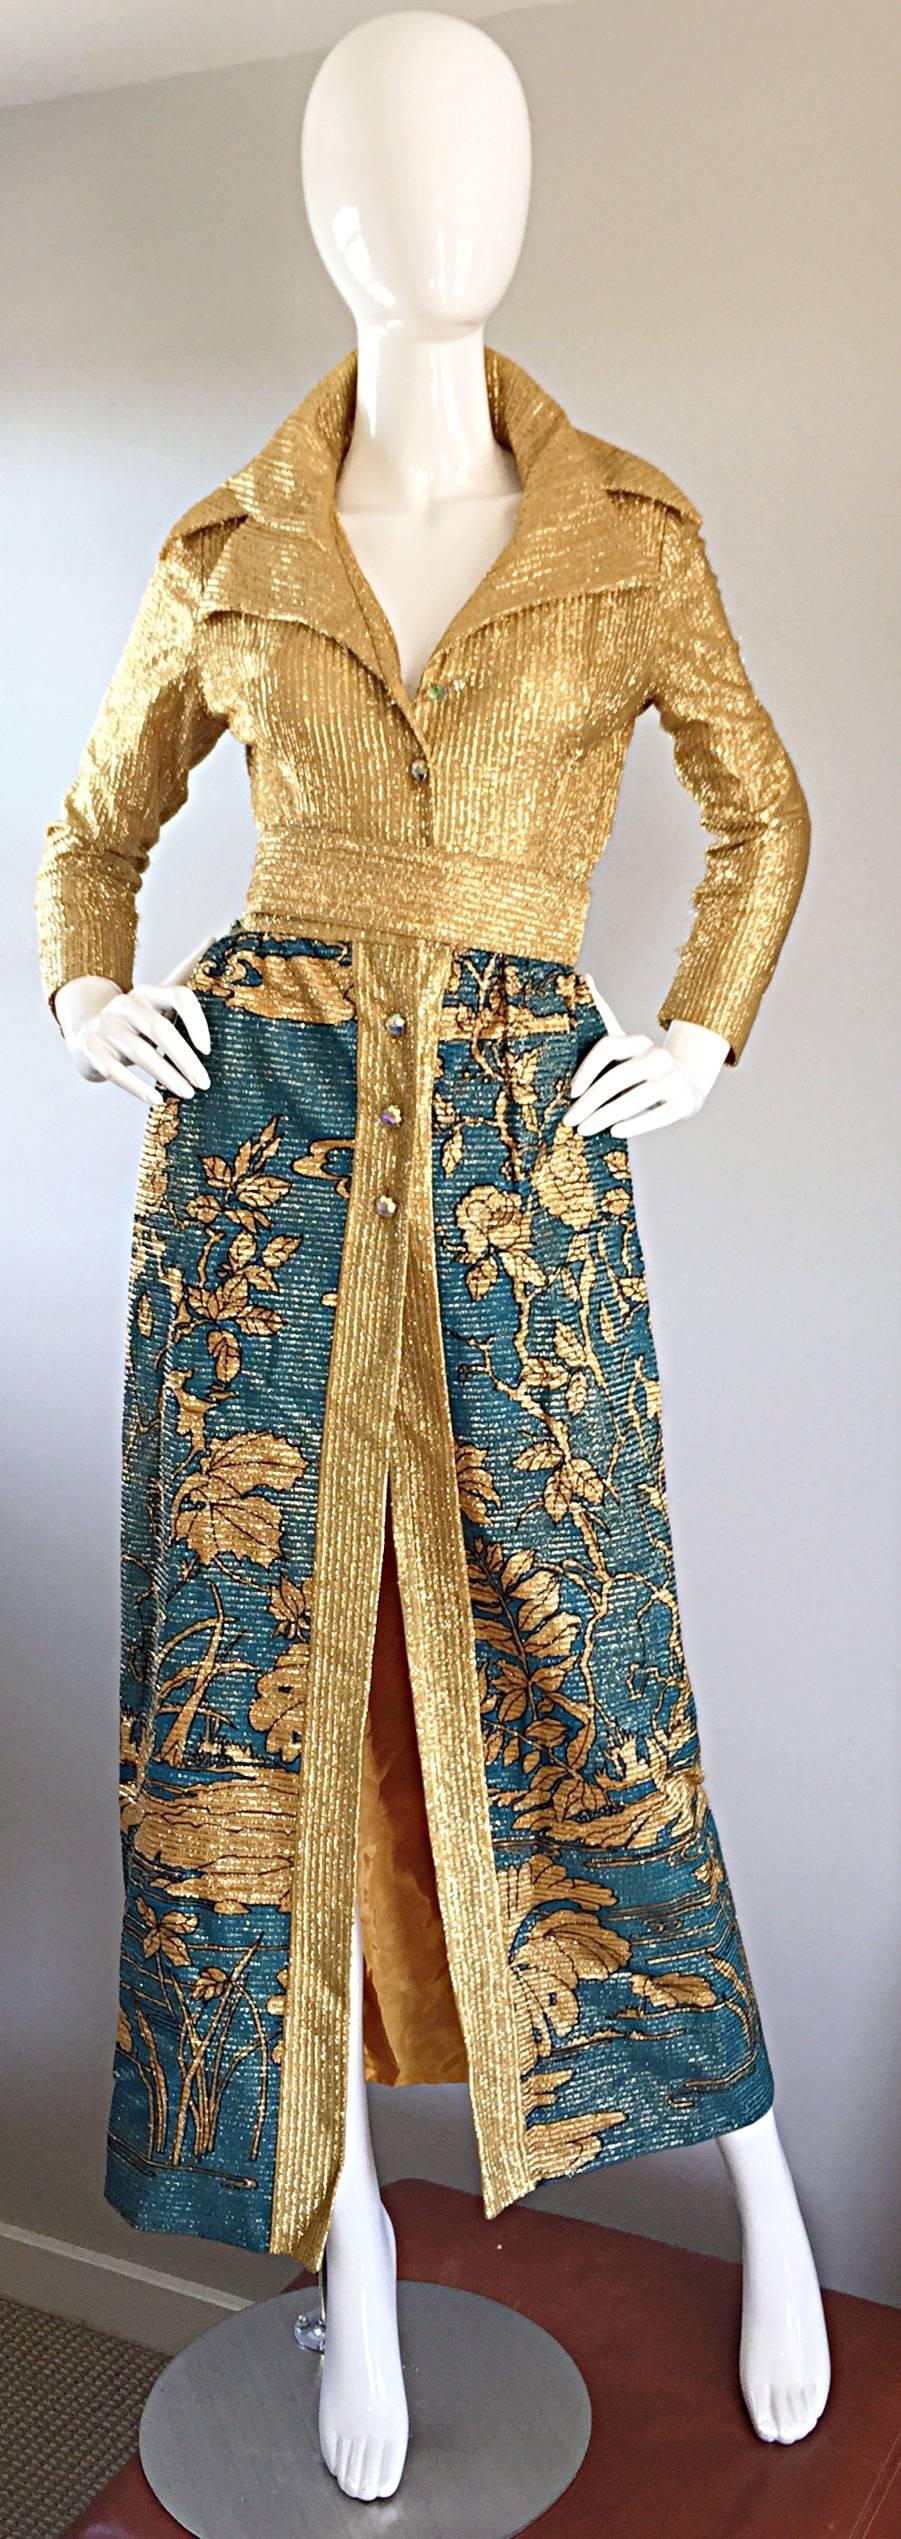 Amazing Henry Higgins 1970s Vintage Dress, Hot Pants & Belt Gold + Blue Metallic 2